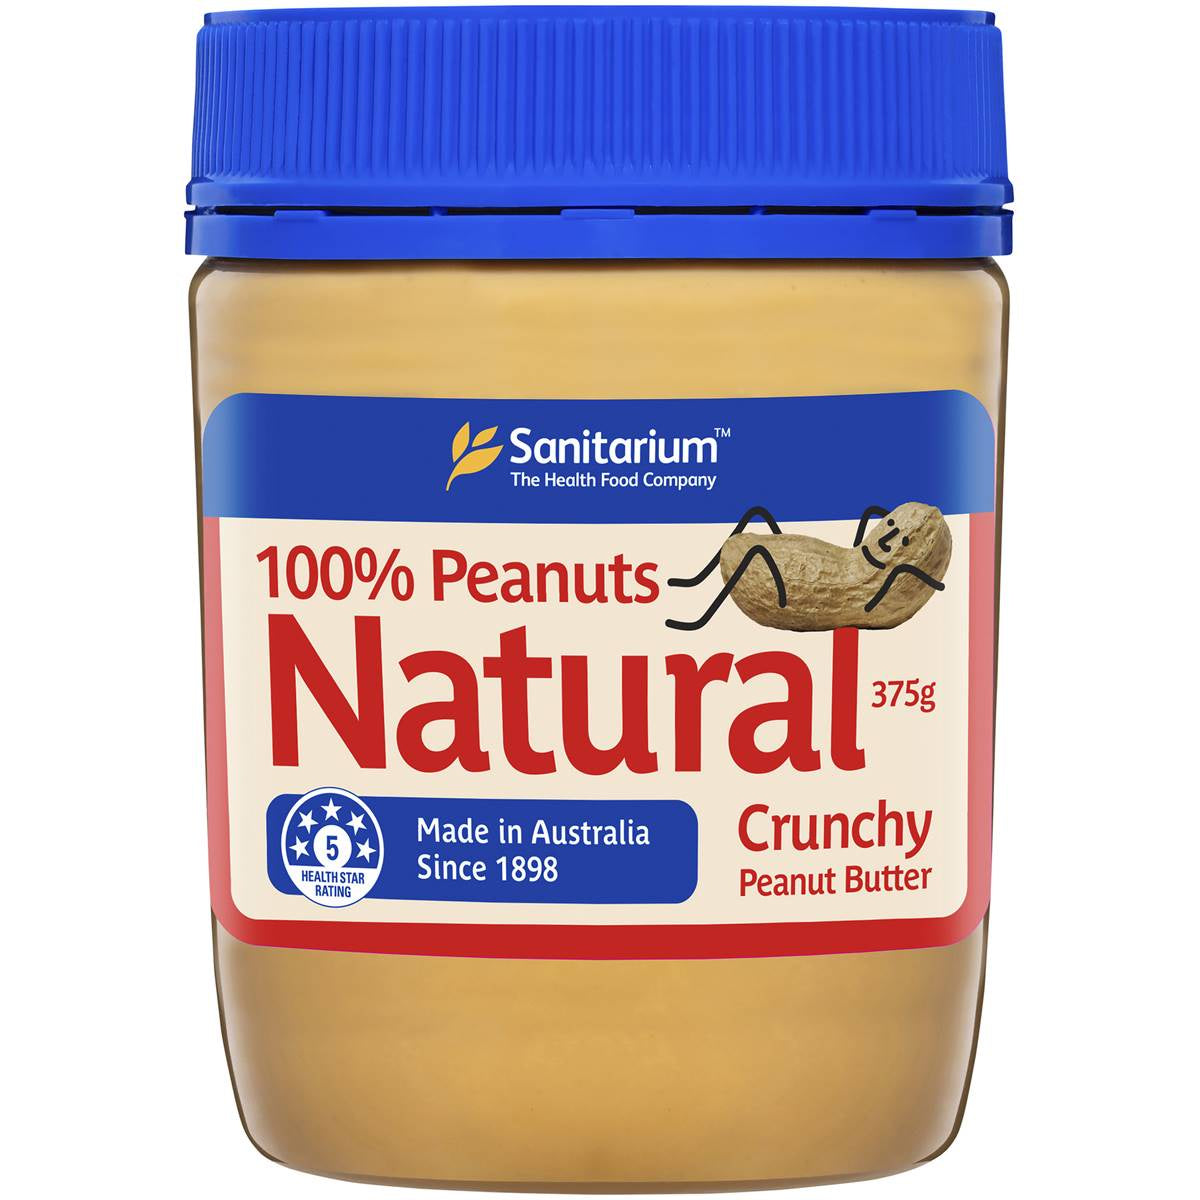 Sanitarium Peanut Butter Crunchy 500g